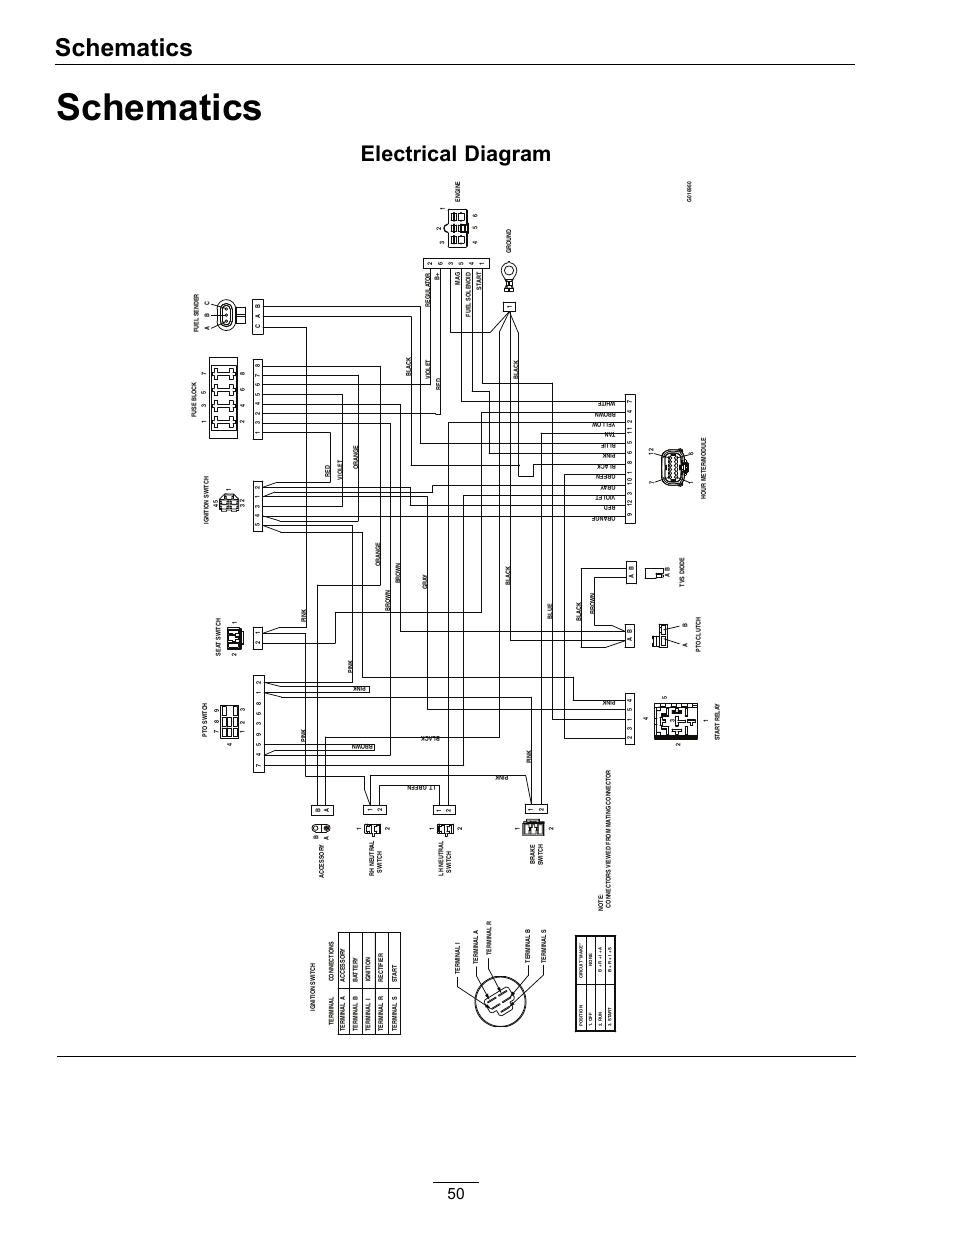 22r carburetor diagram